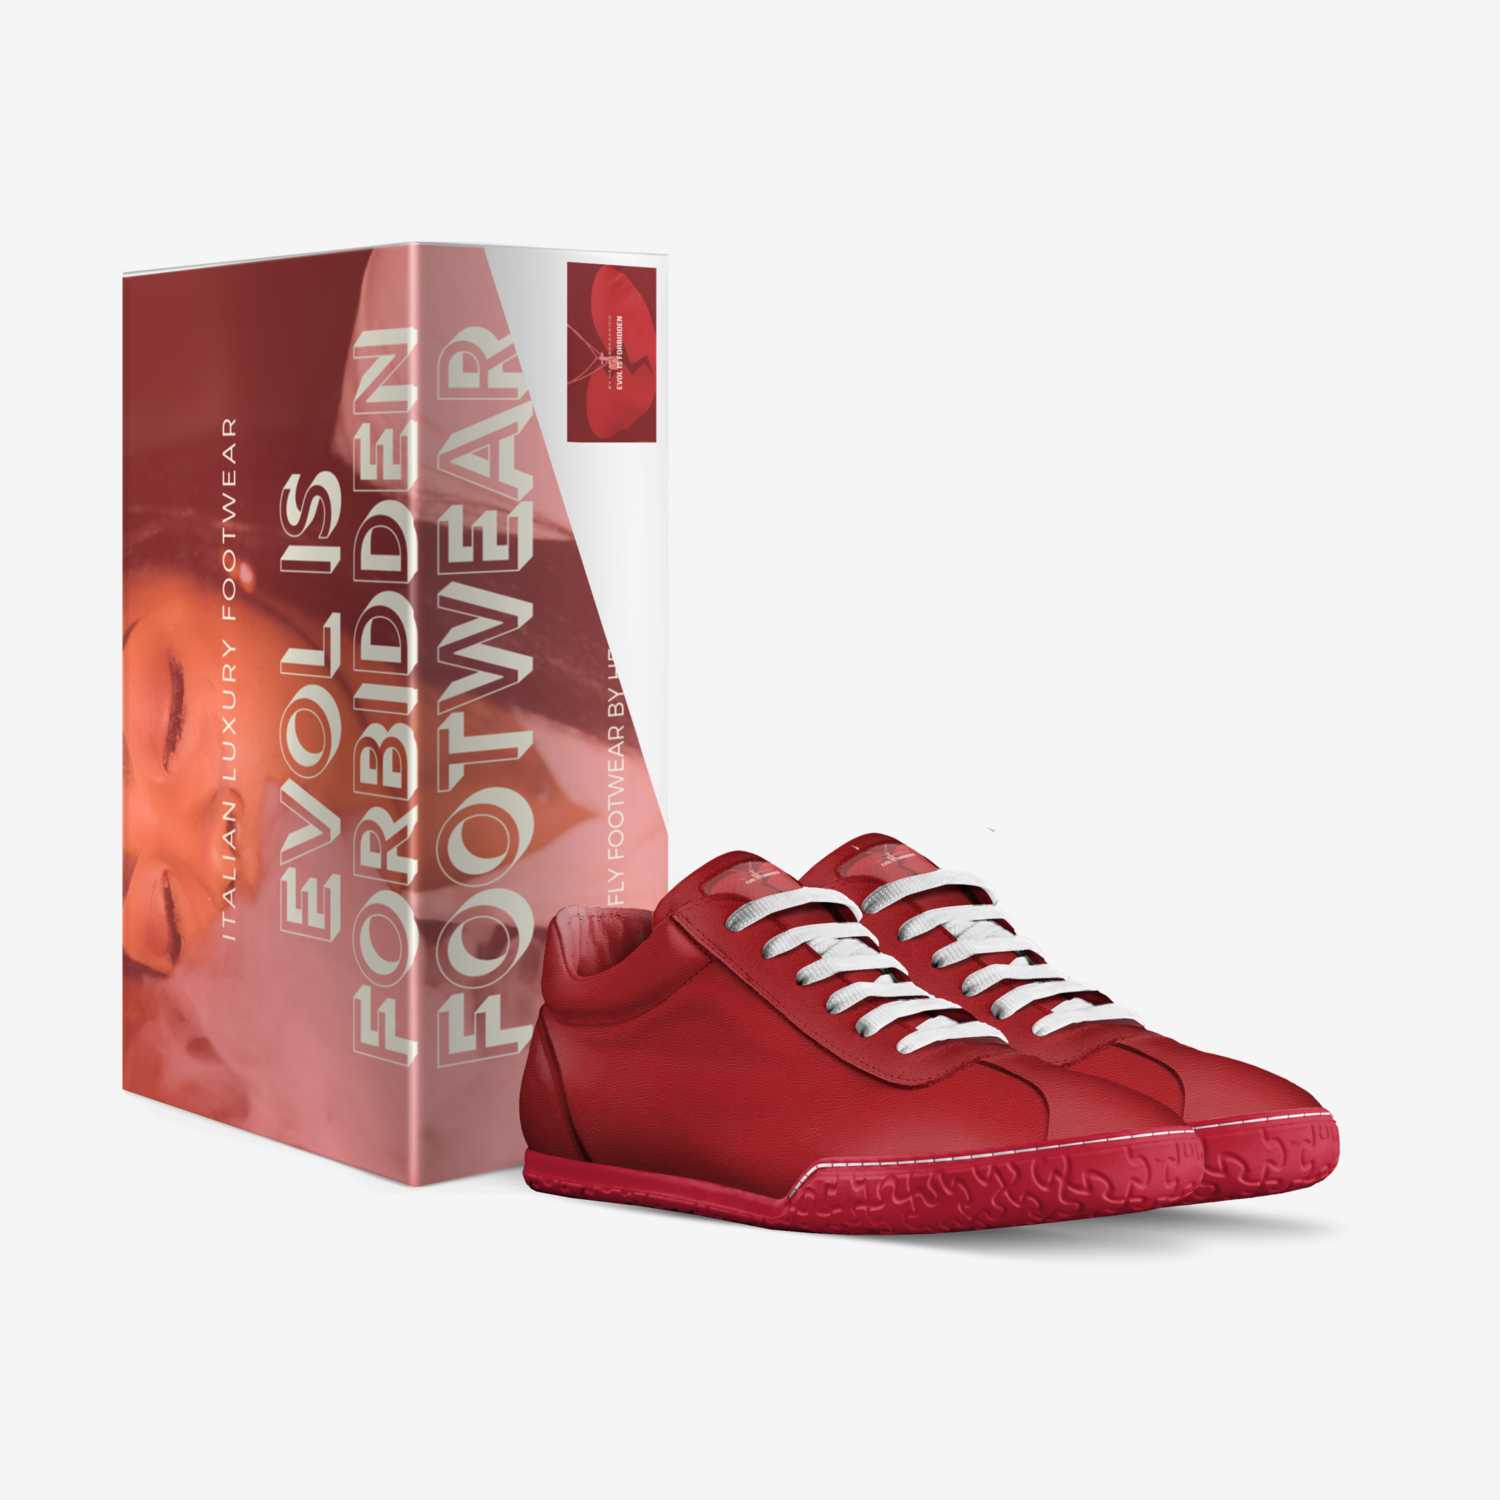 EVOL IS FORBIDDEN custom made in Italy shoes by Khalil Walker-eldridge | Box view